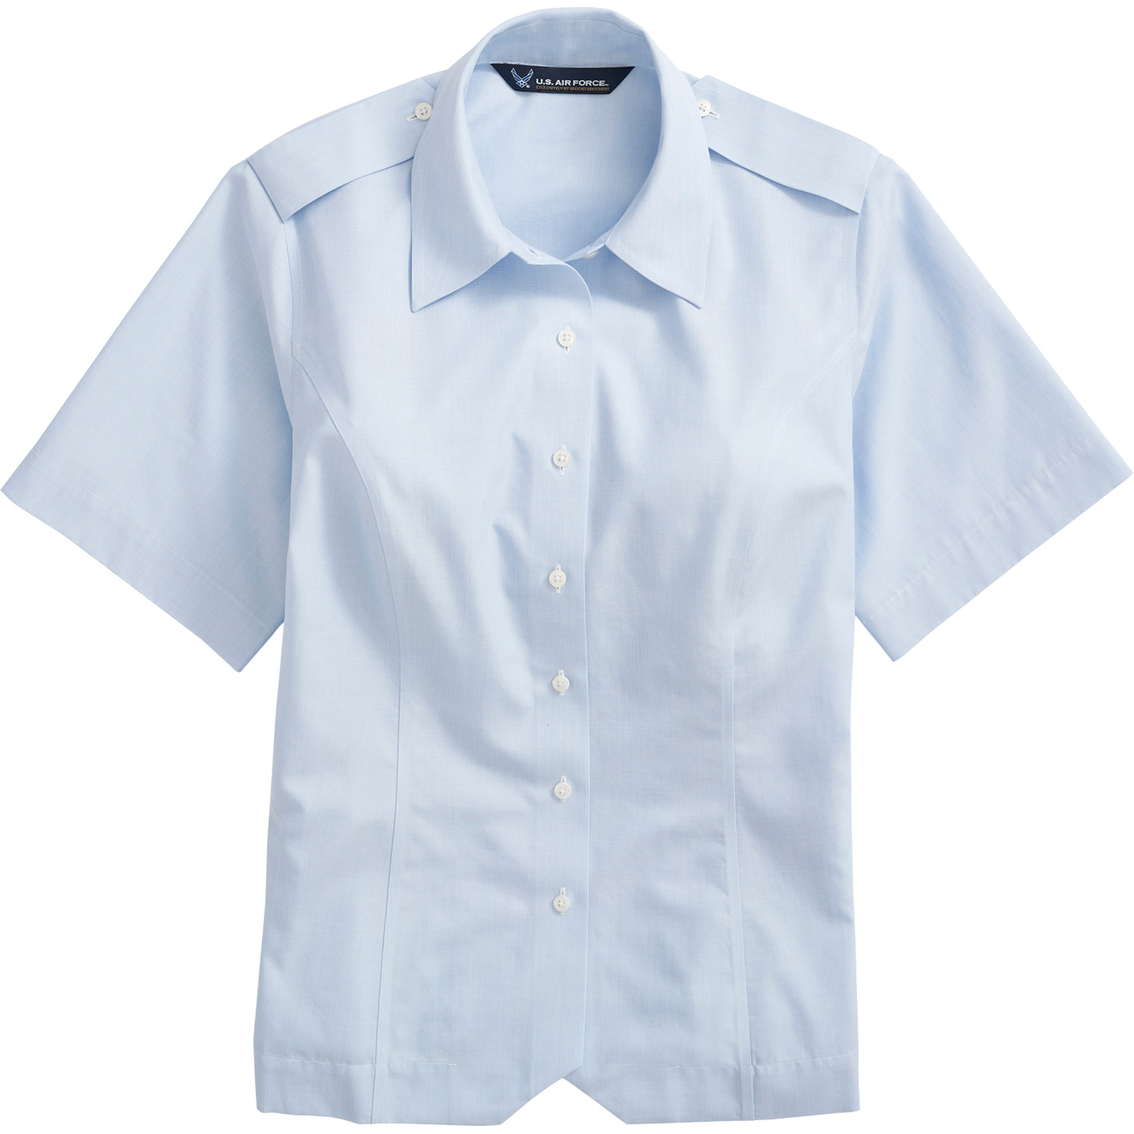 Brooks Brothers Premier Dress Shirt - Image 4 of 6